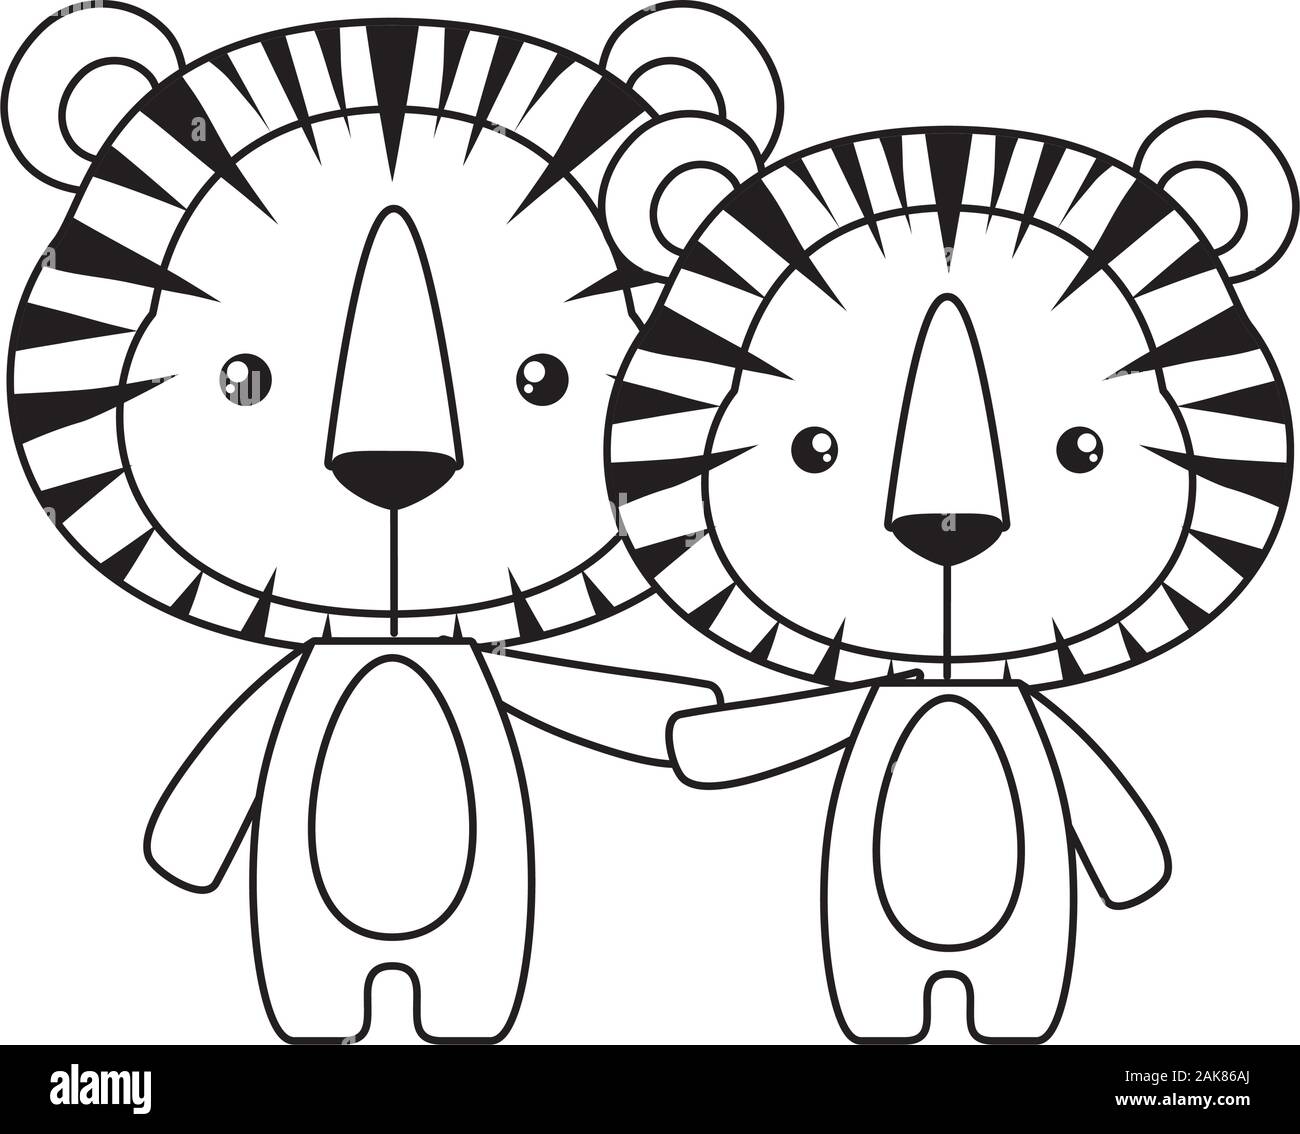 Cute tigers cartoons vector design Stock Vector